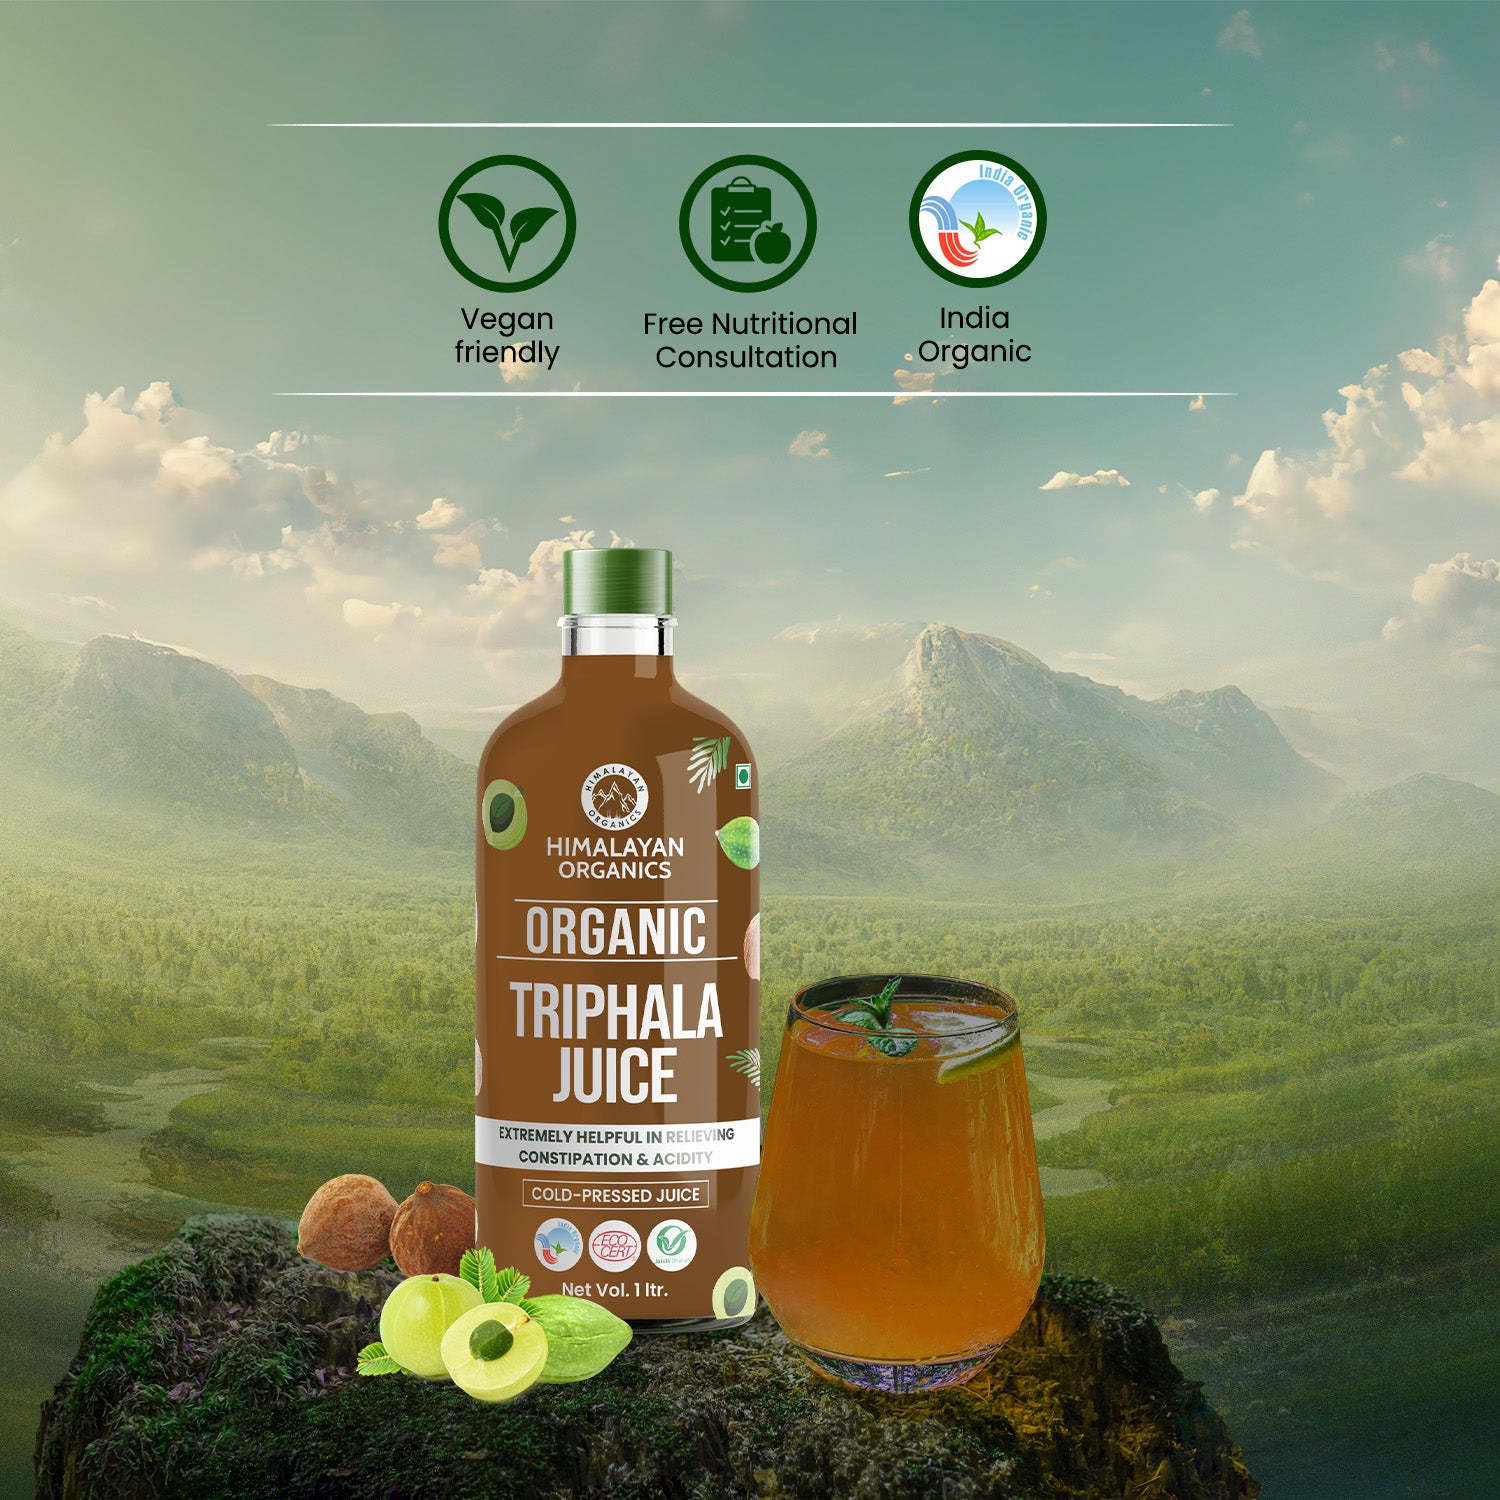 Himalayan Organics Organic Triphala Juice | Supports Metabolism, Immunity | Natural Cold-Pressed Organic Juice with Anti-Oxidants. (1L)